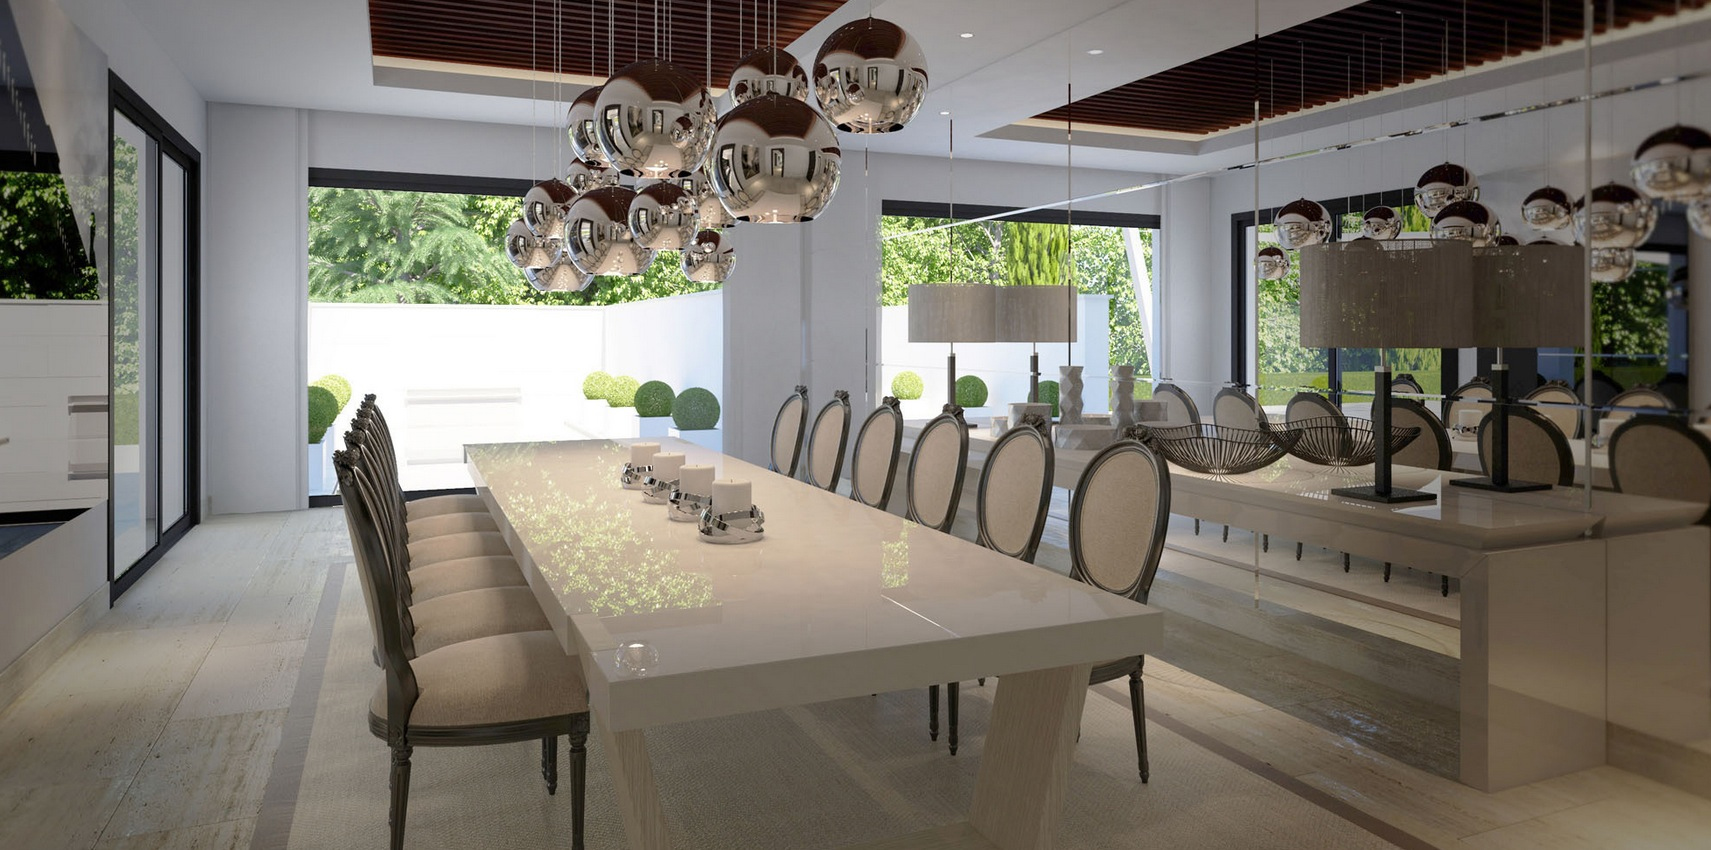 Formal Dining Room Interior Design Ideas, Formal Dining Room Or Open Kitchen